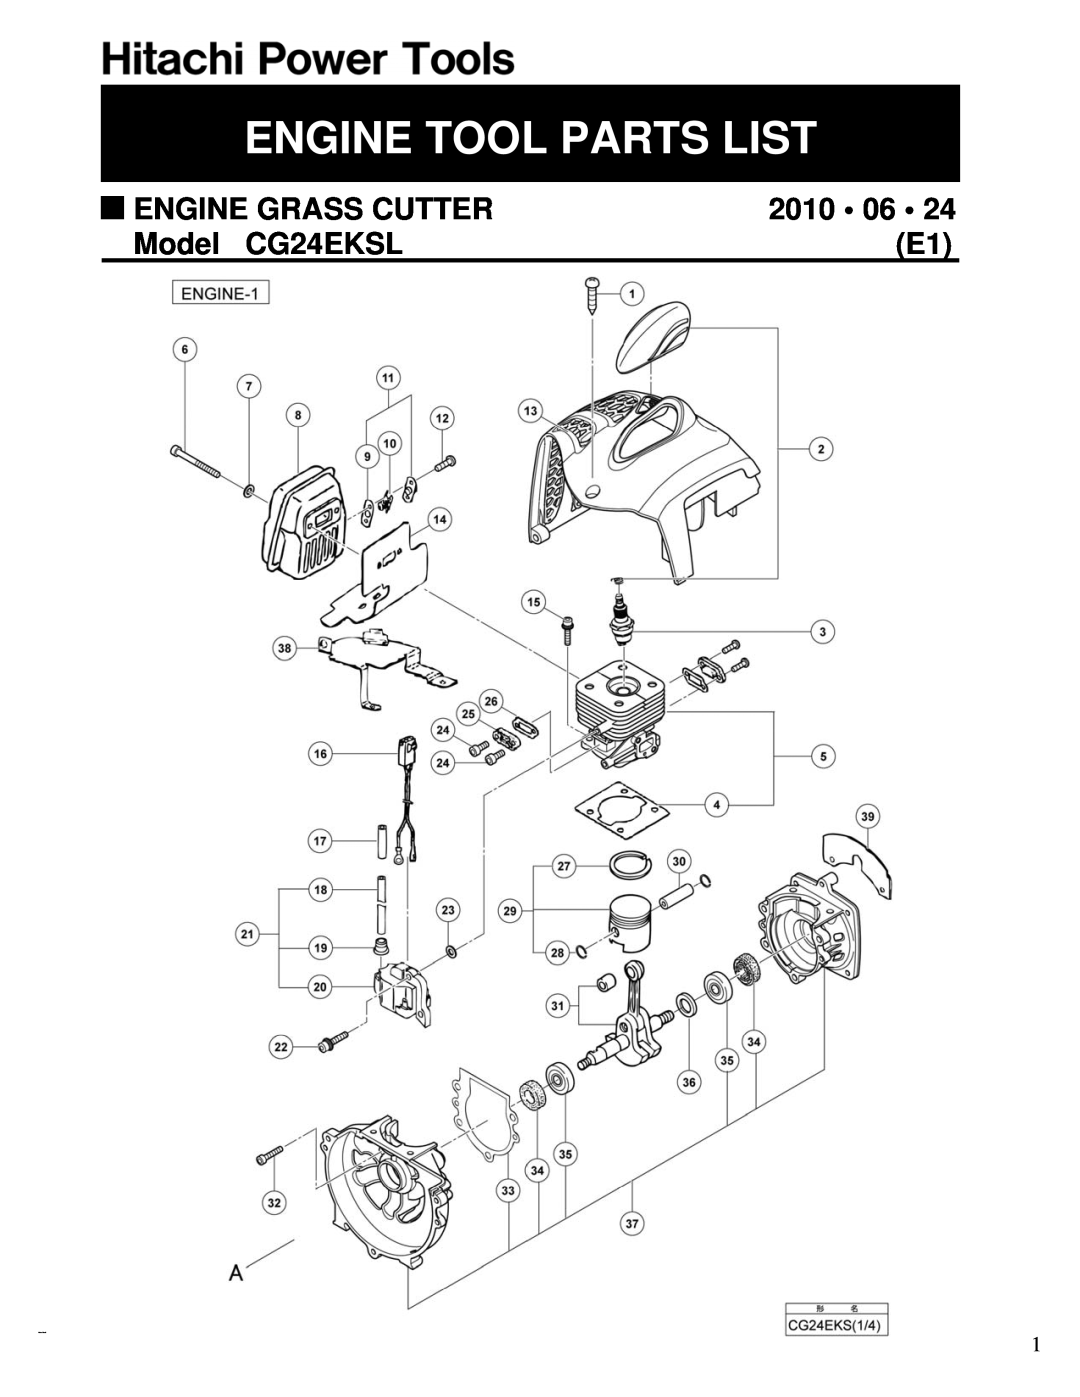 Hitachi manual Engine Tool Parts List, Engine Grass Cutter, Model CG24EKSL, 2010, Allen Roell 